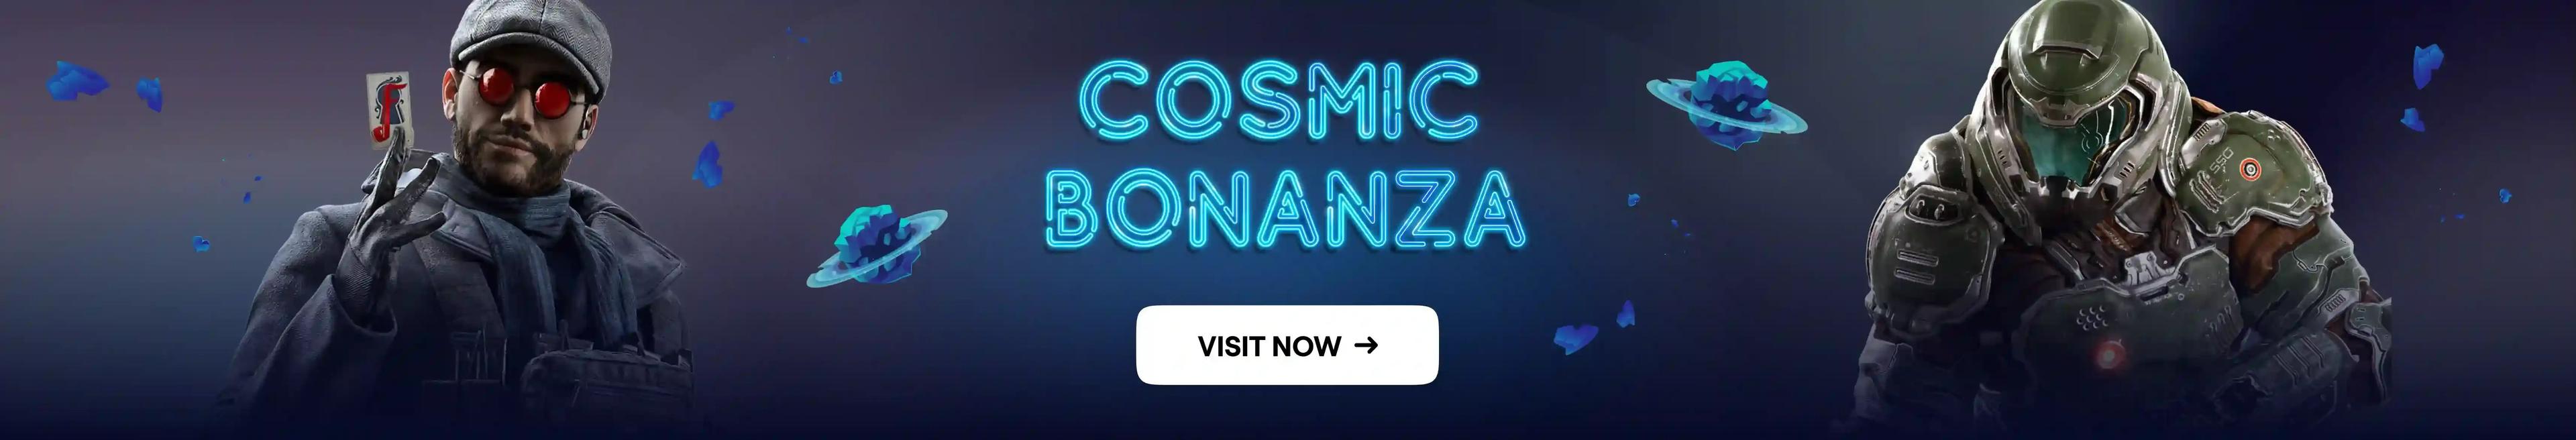 Cosmic Bonanza desktop